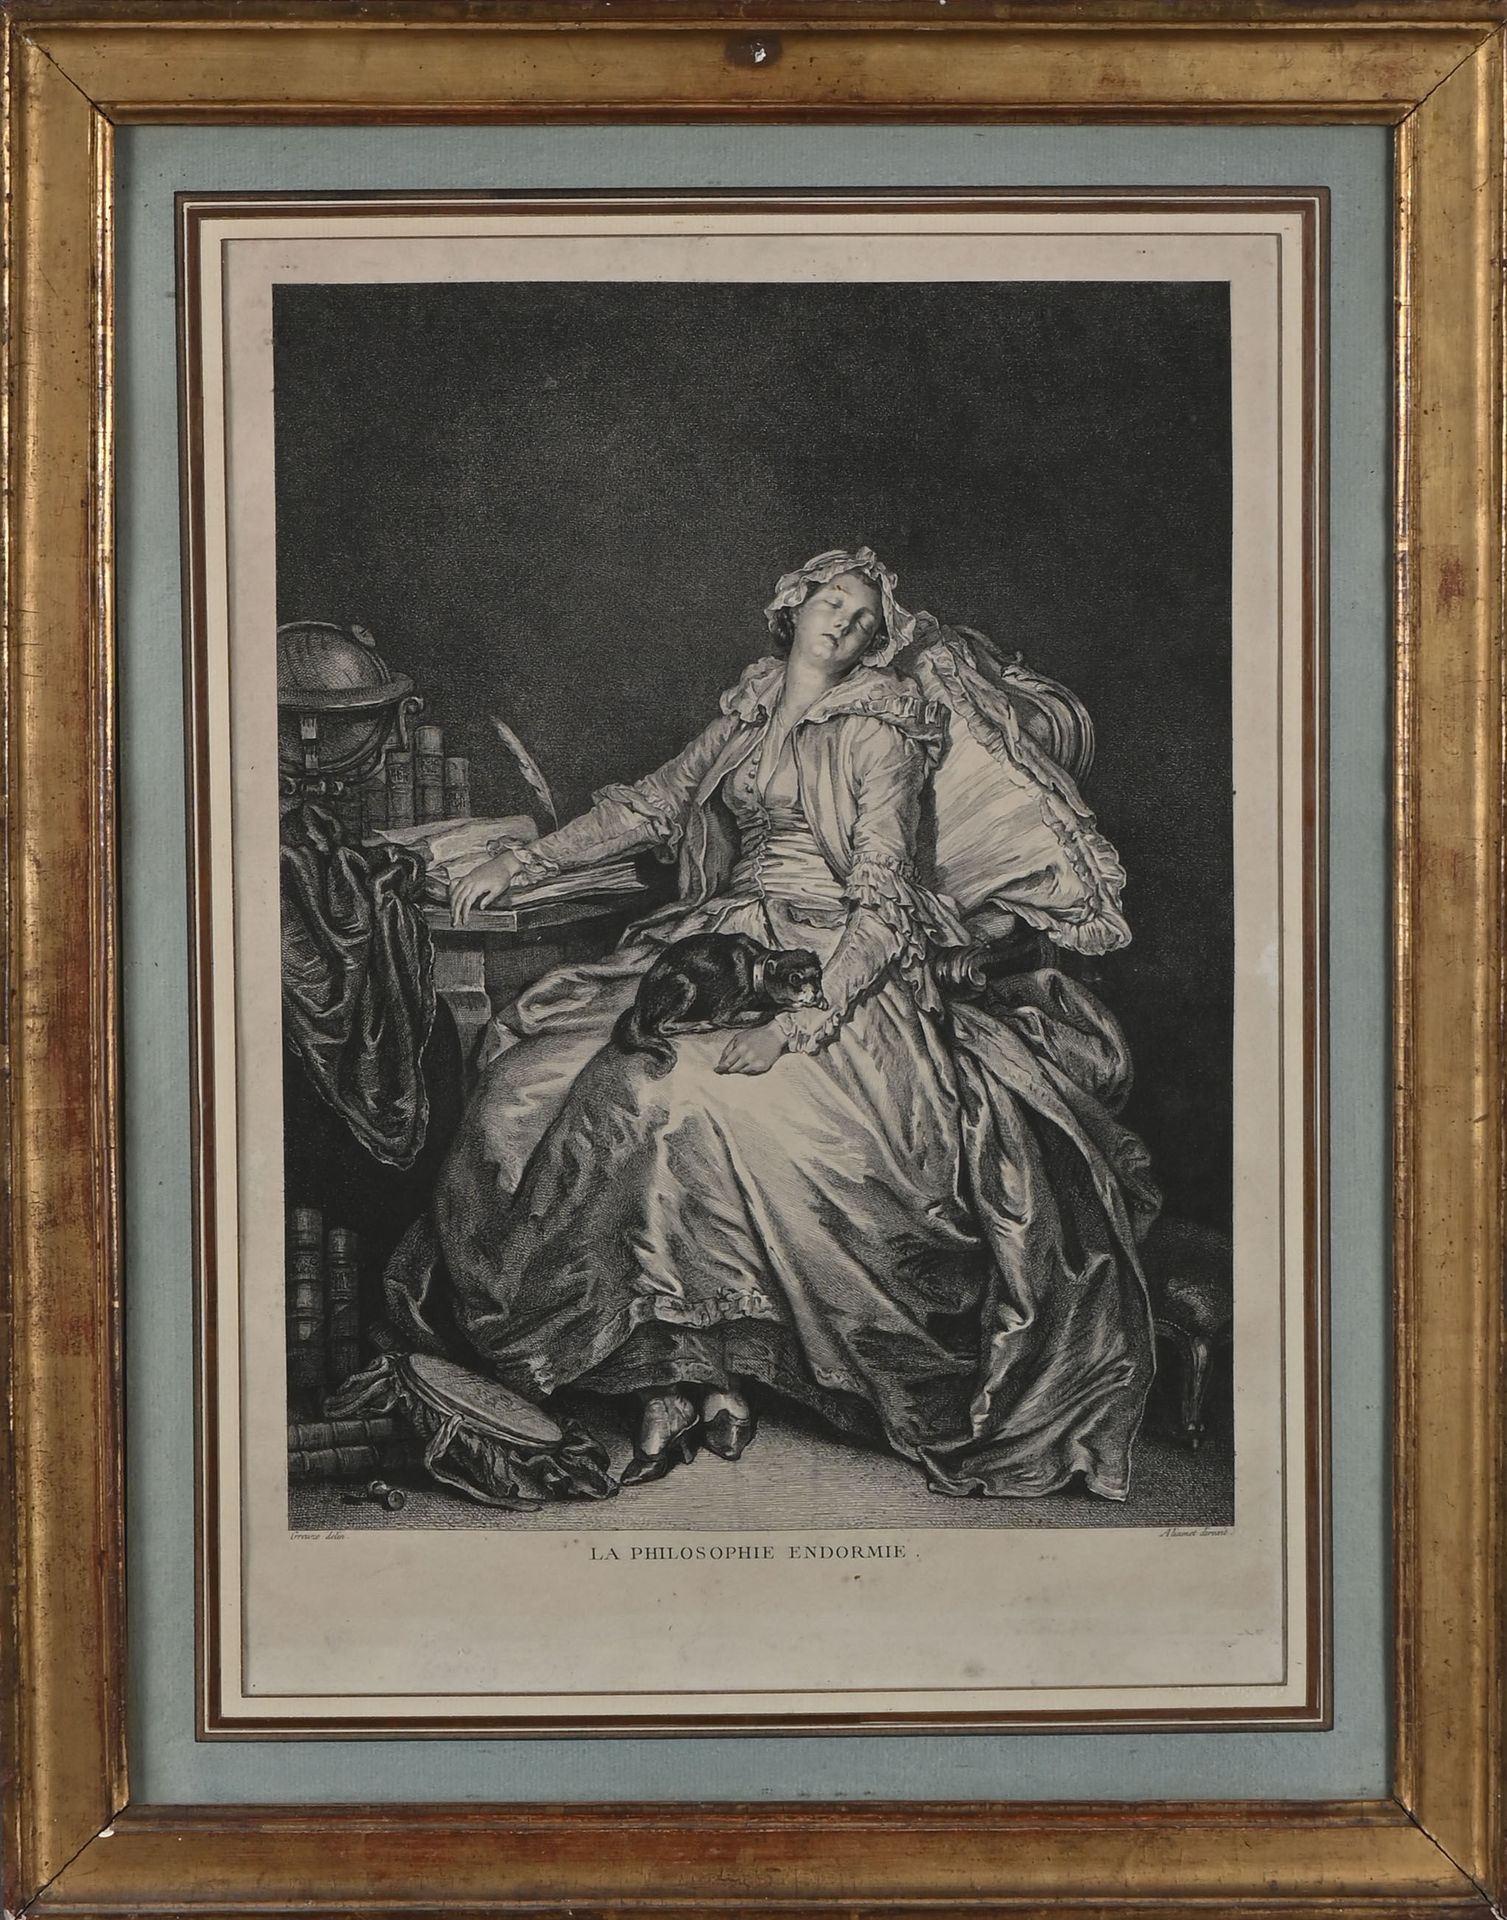 Null 仿照Jean-Baptiste GREUZE (1725-1805)。
沉睡的哲学
版画
玻璃下装裱
40,5 x 31 cm.